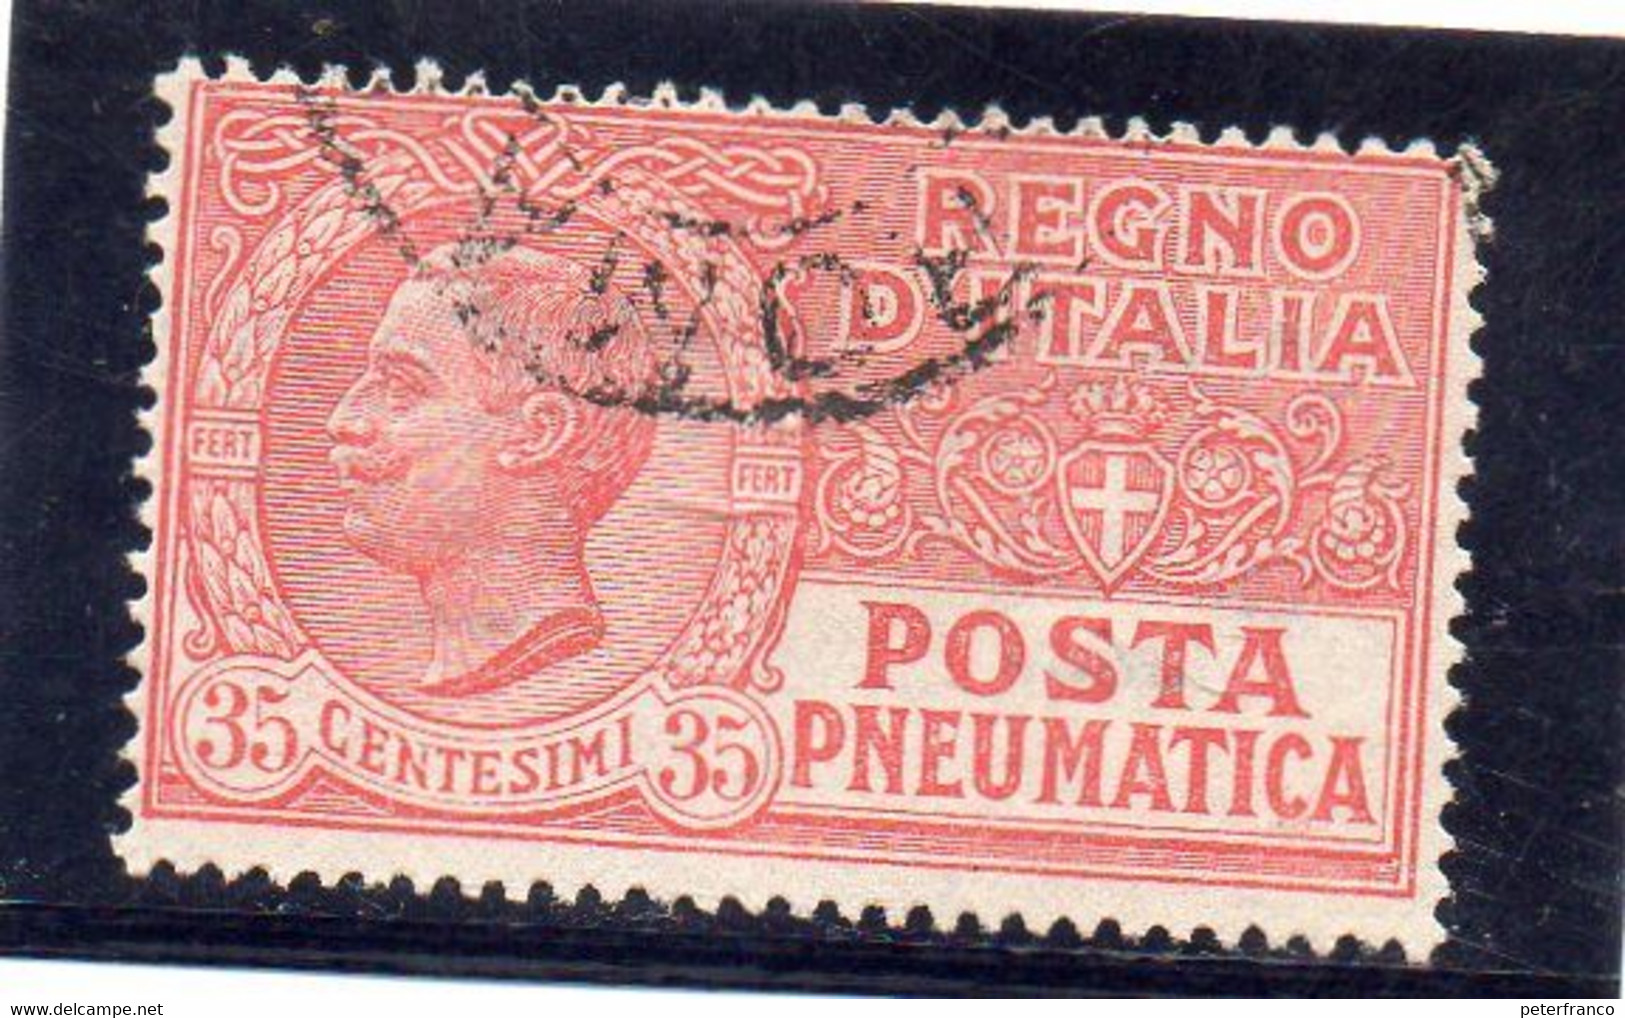 B - 1927 Italia - Posta Pneumatica - Rohrpost